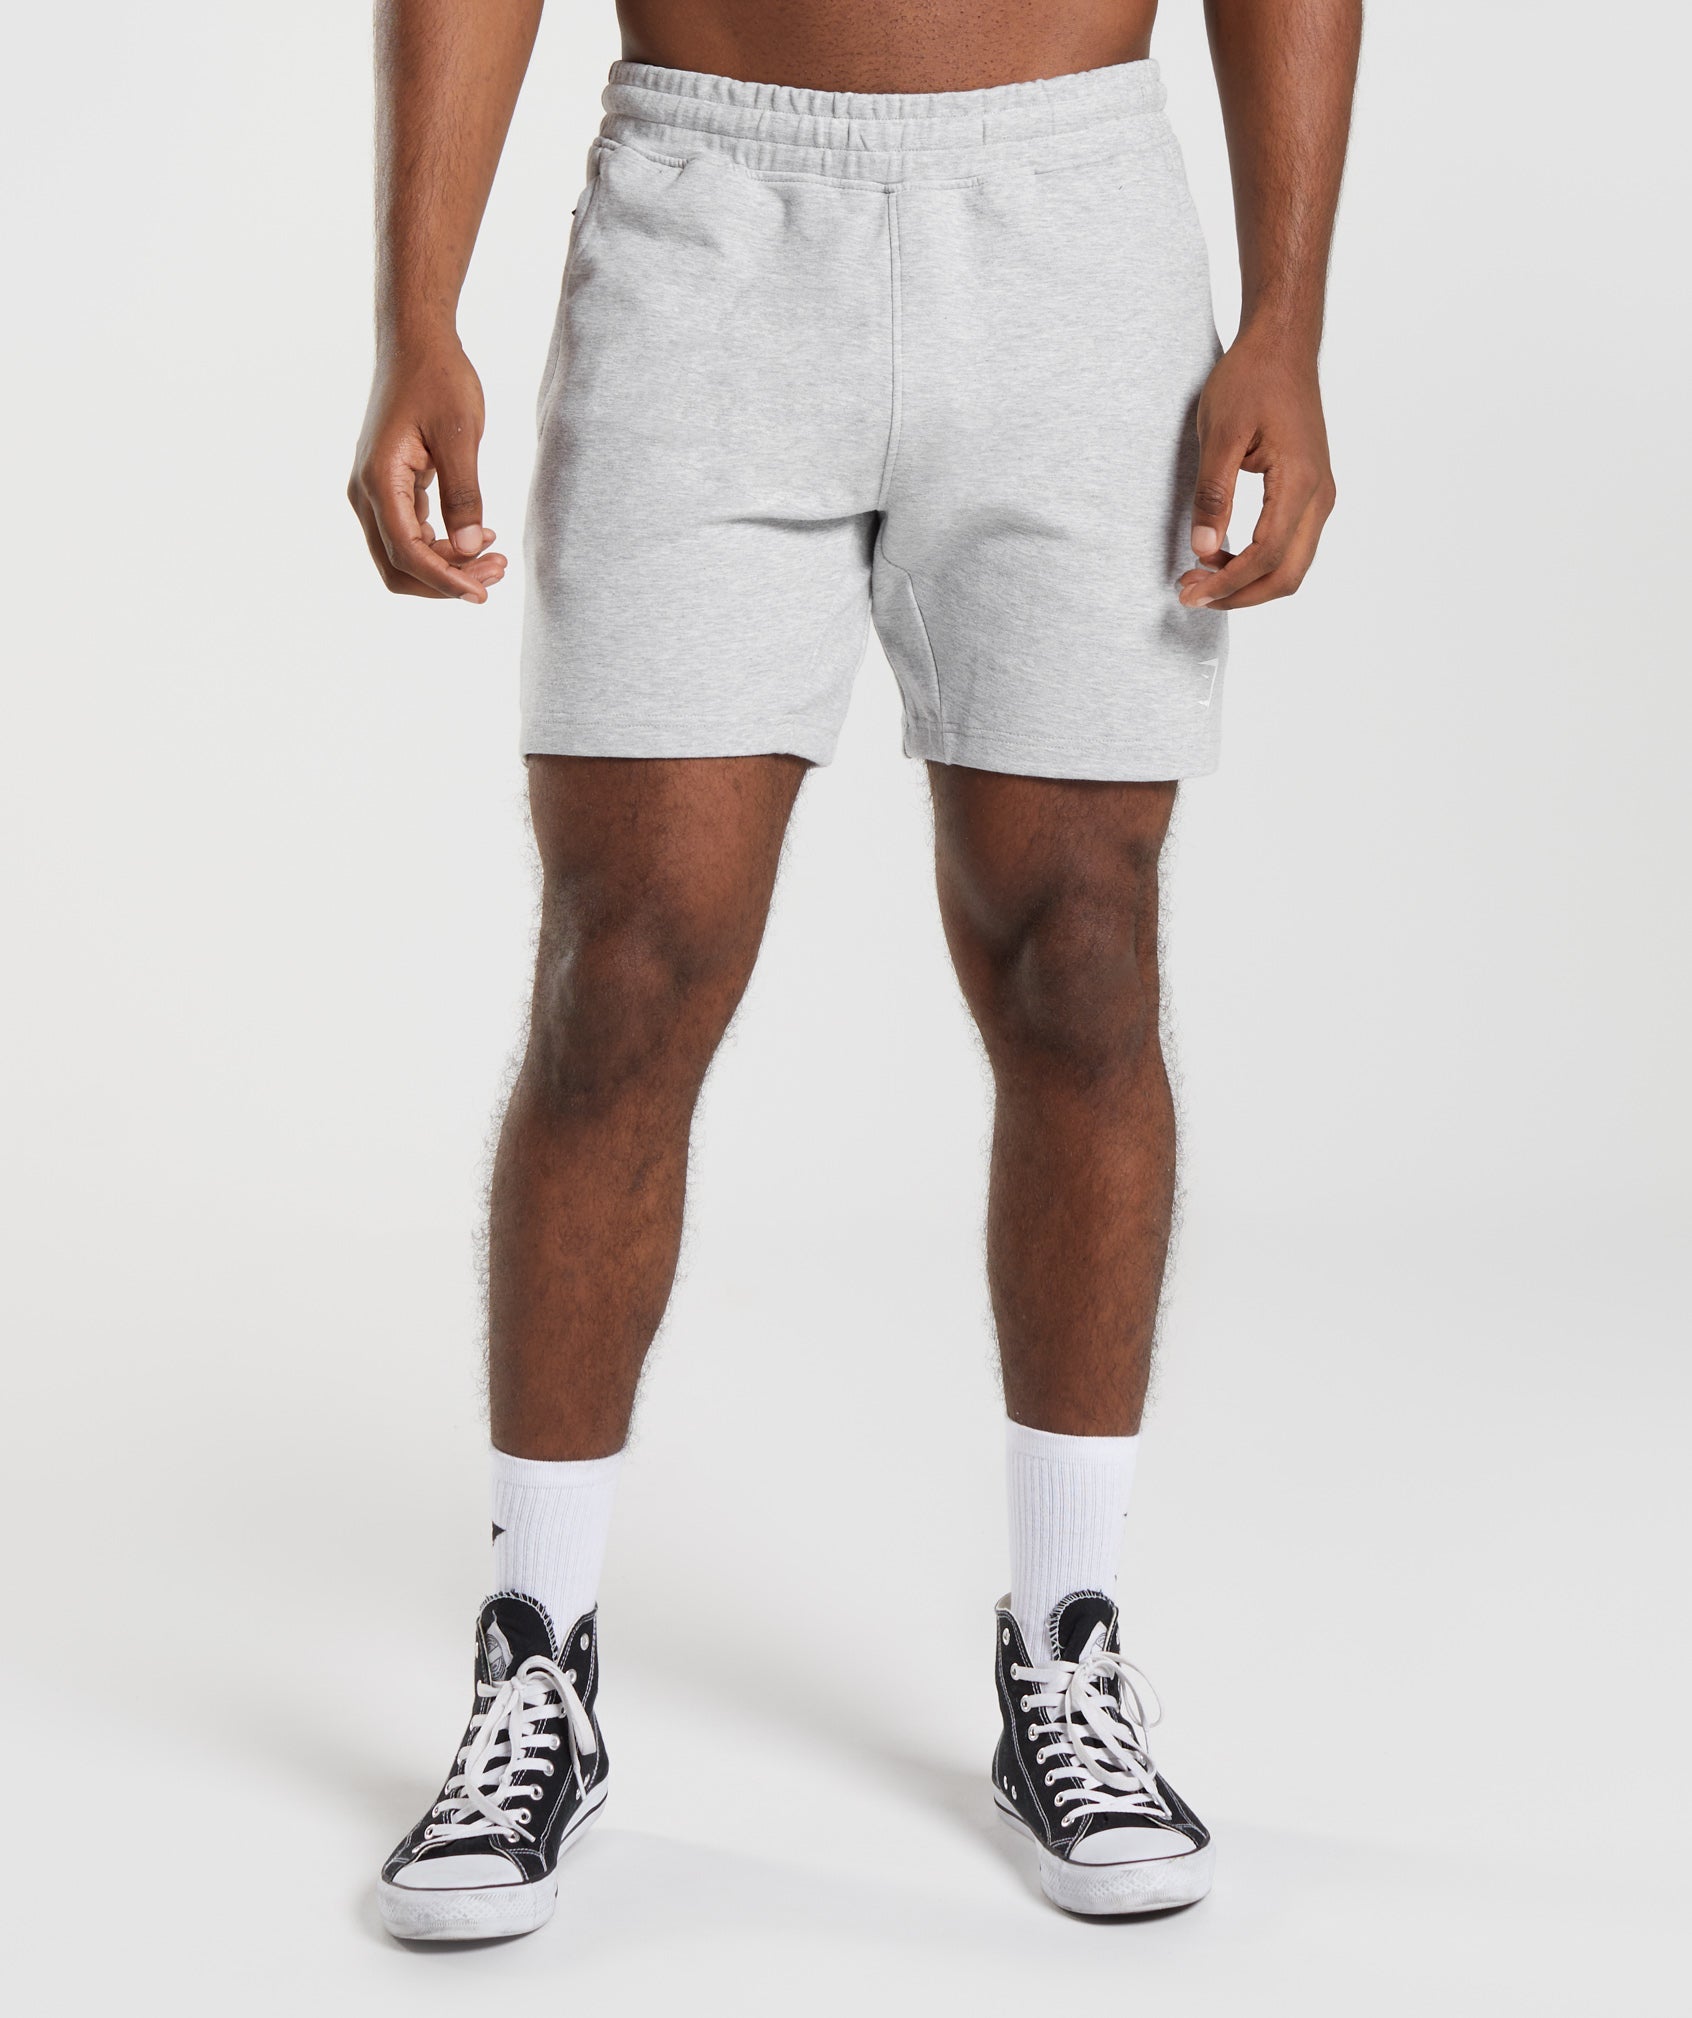 React 7" Shorts in Light Grey Core Marl